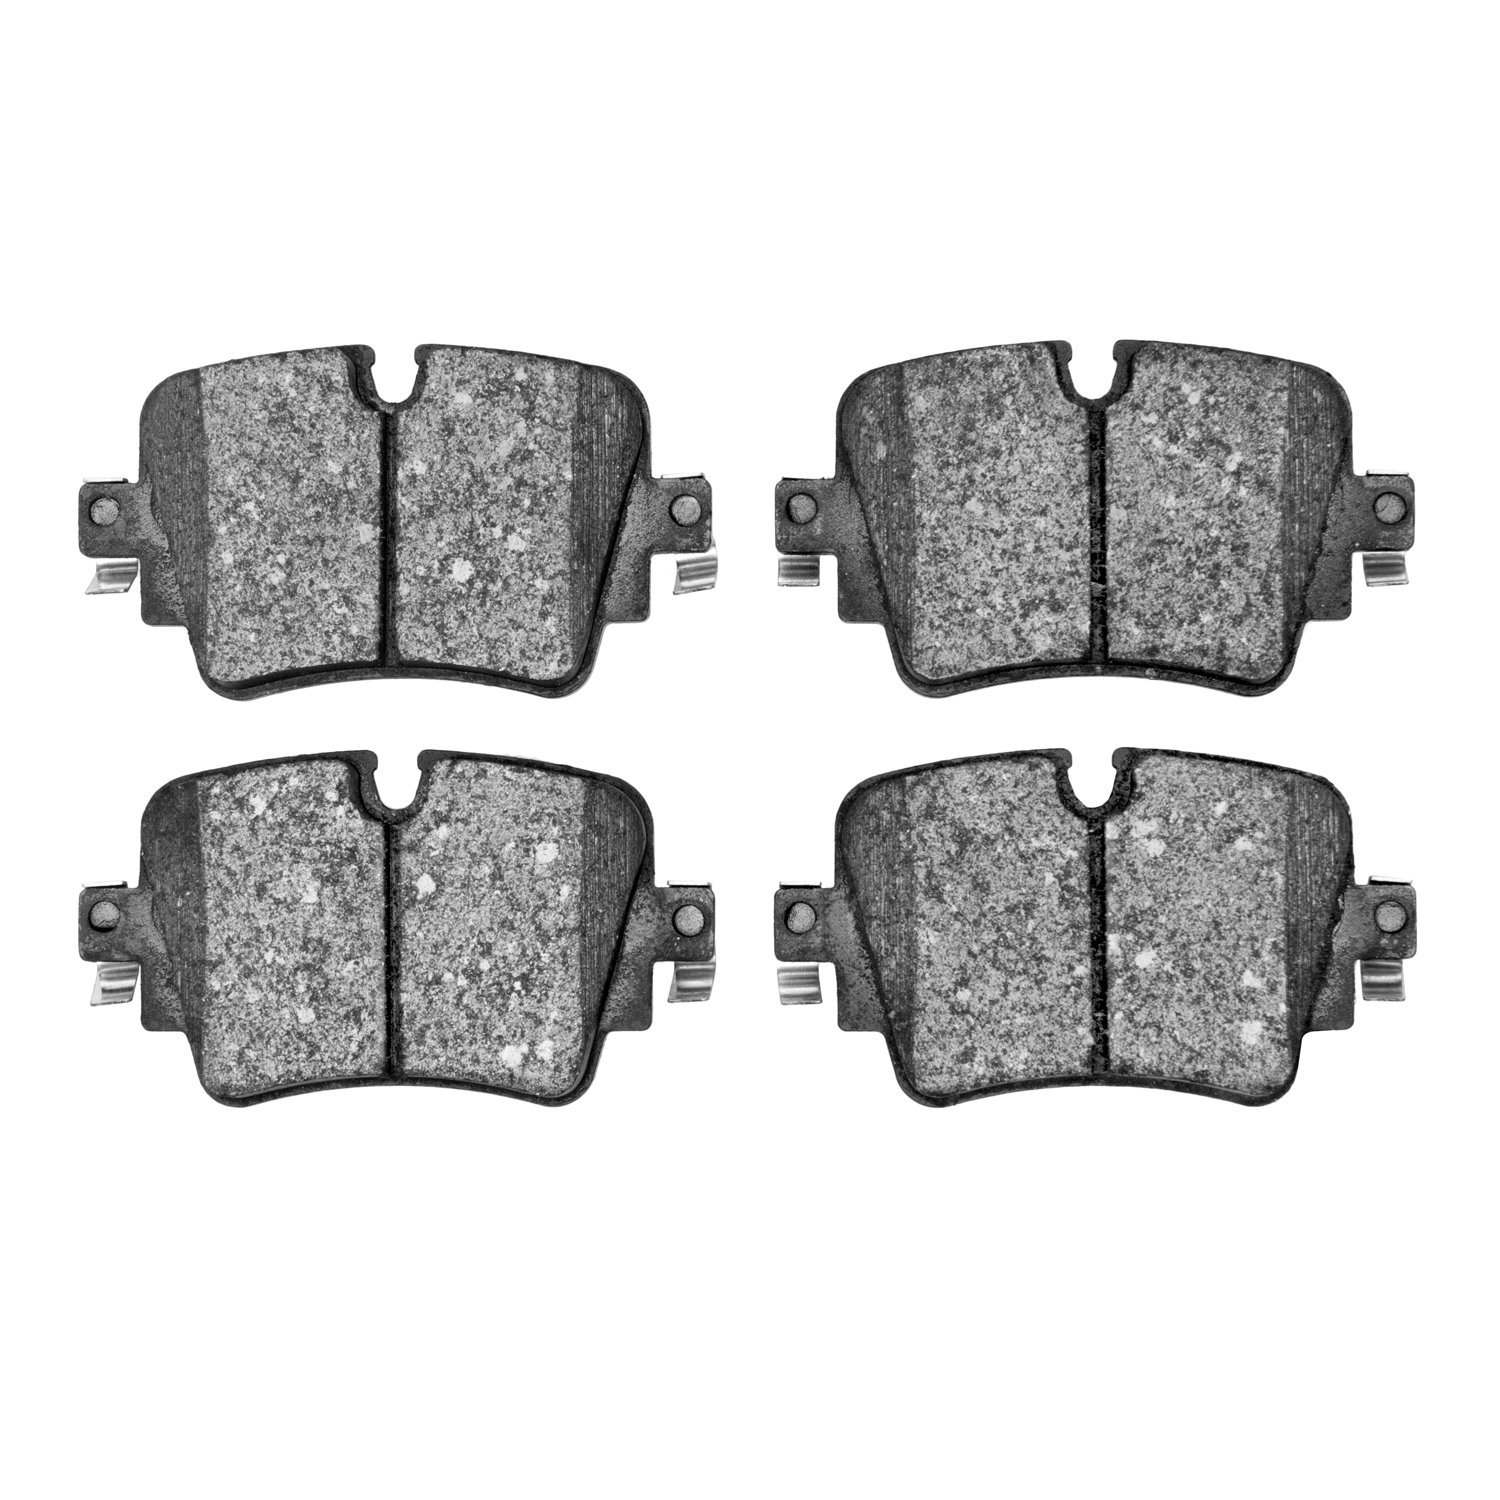 1551-1752-00 5000 Advanced Ceramic Brake Pads, 2016-2019 Jaguar, Position: Rear